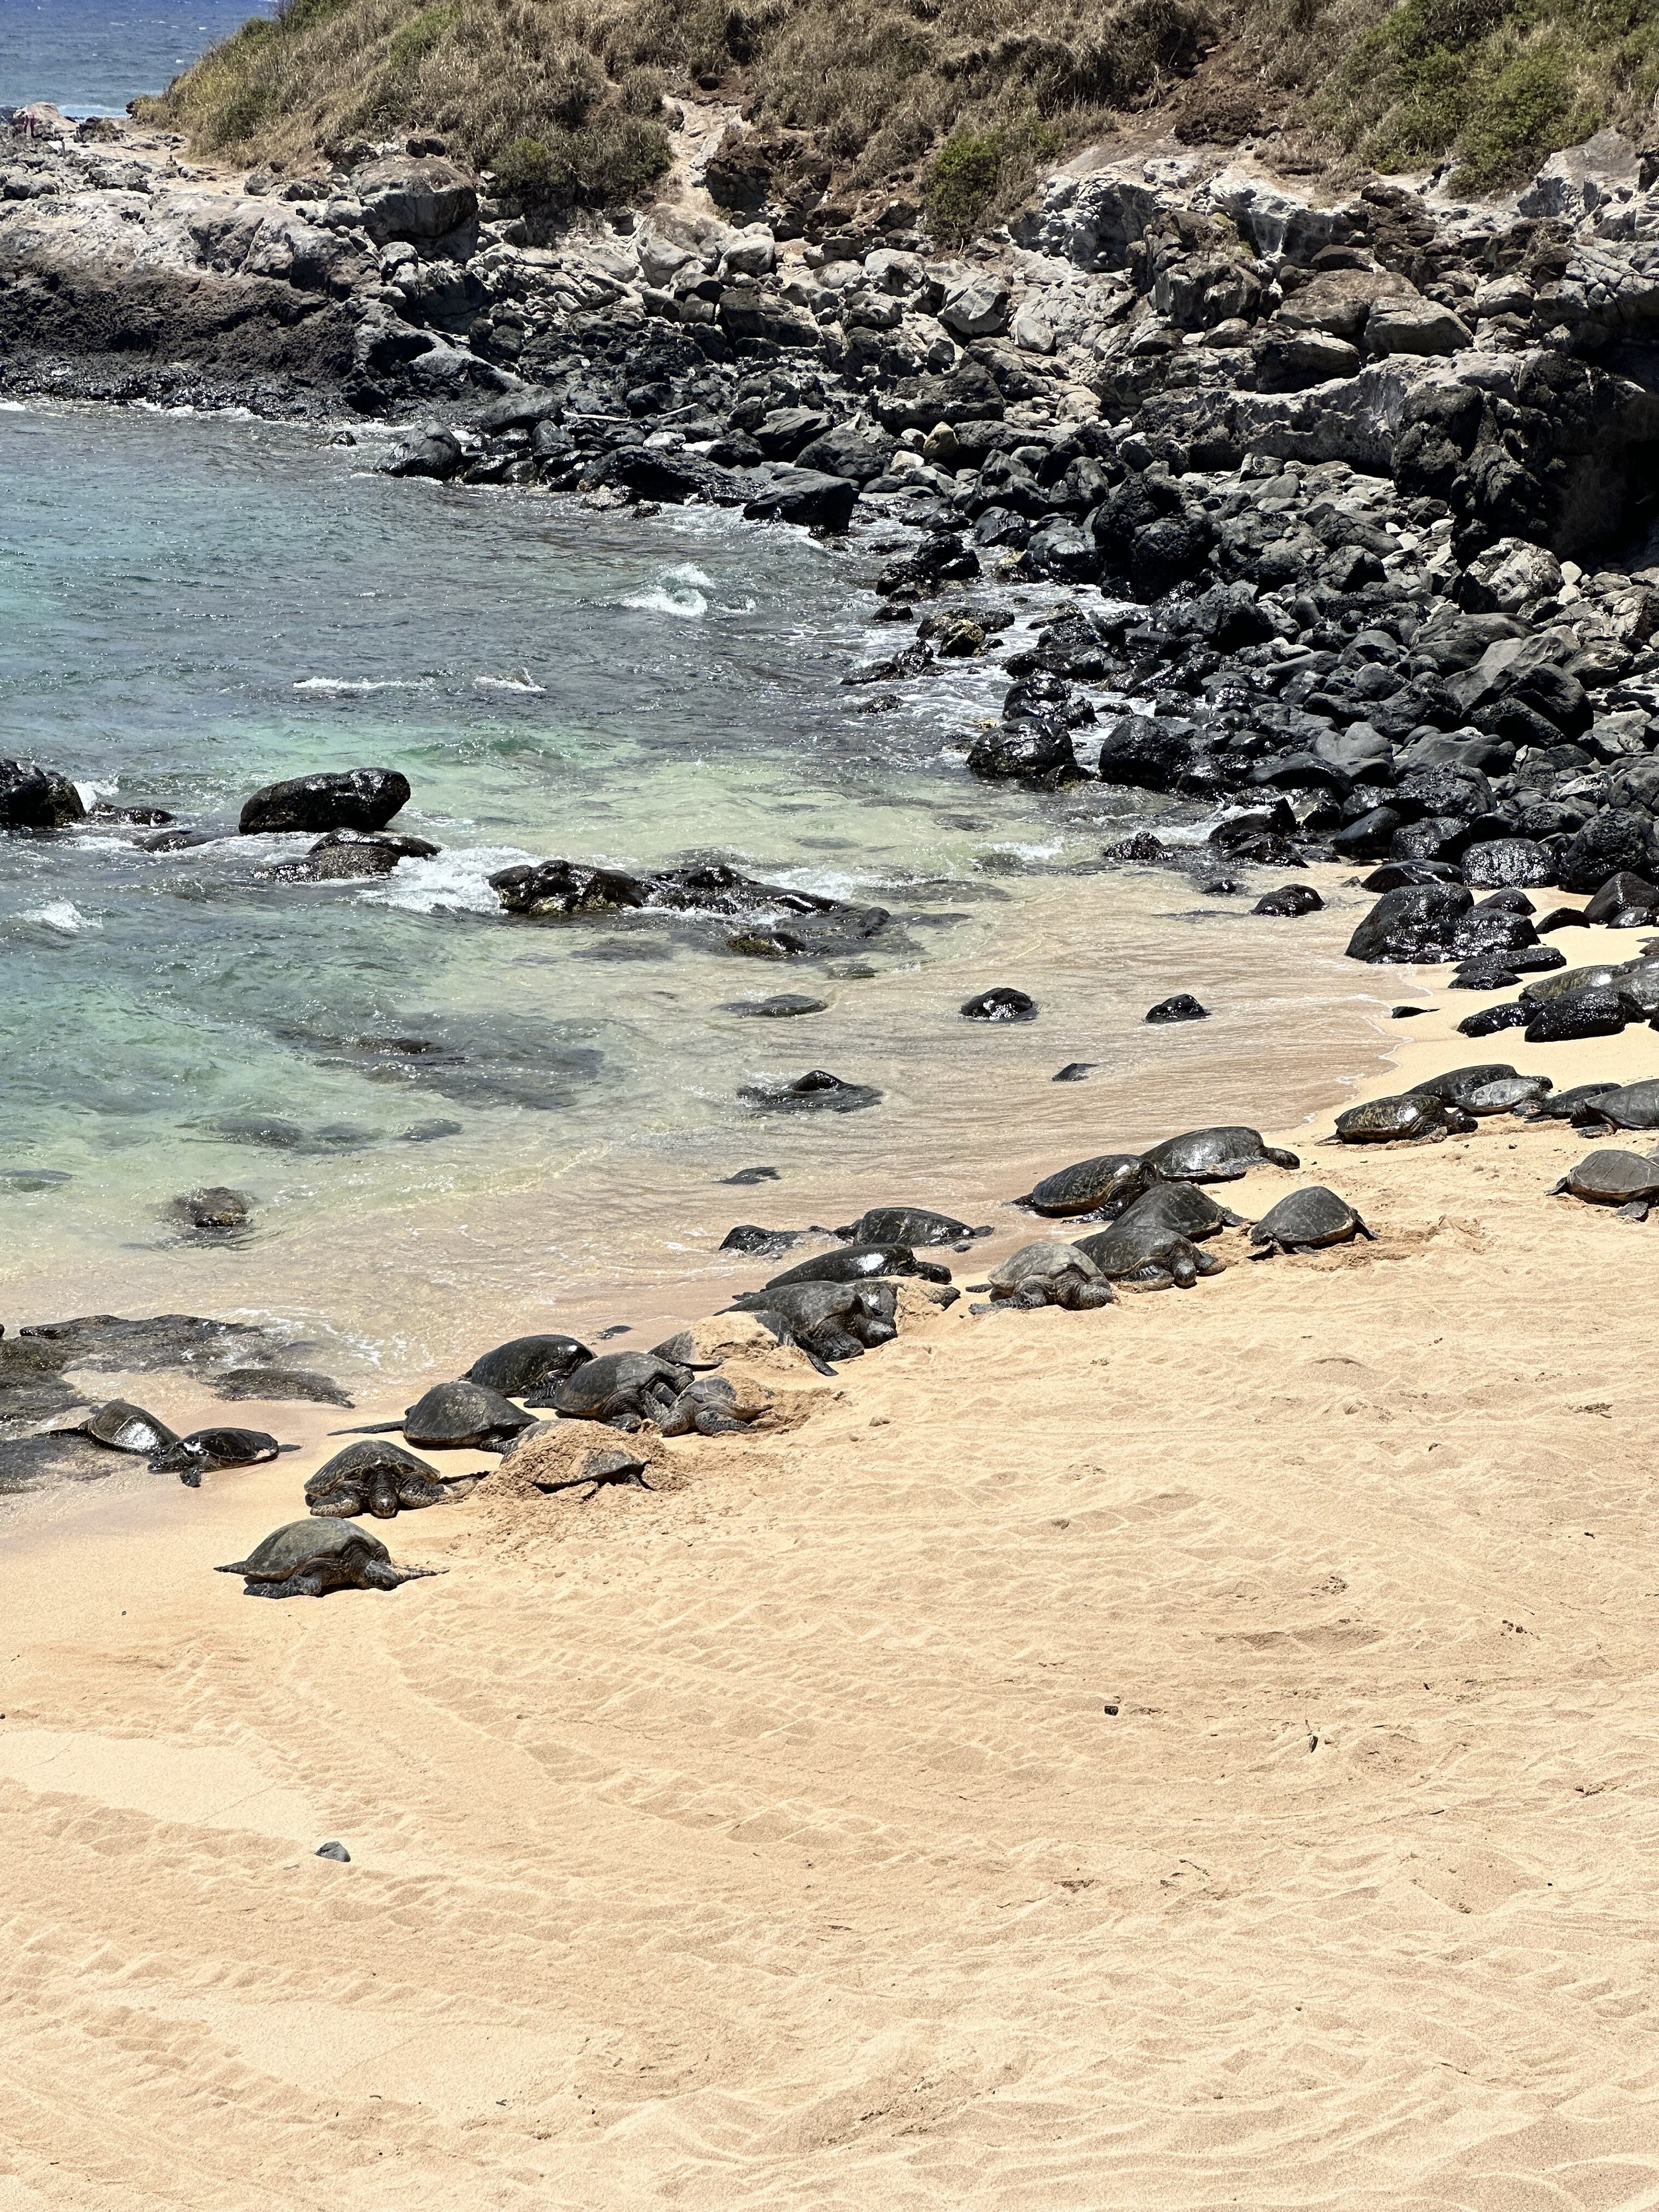 A beach FULL of freaking sea turtles